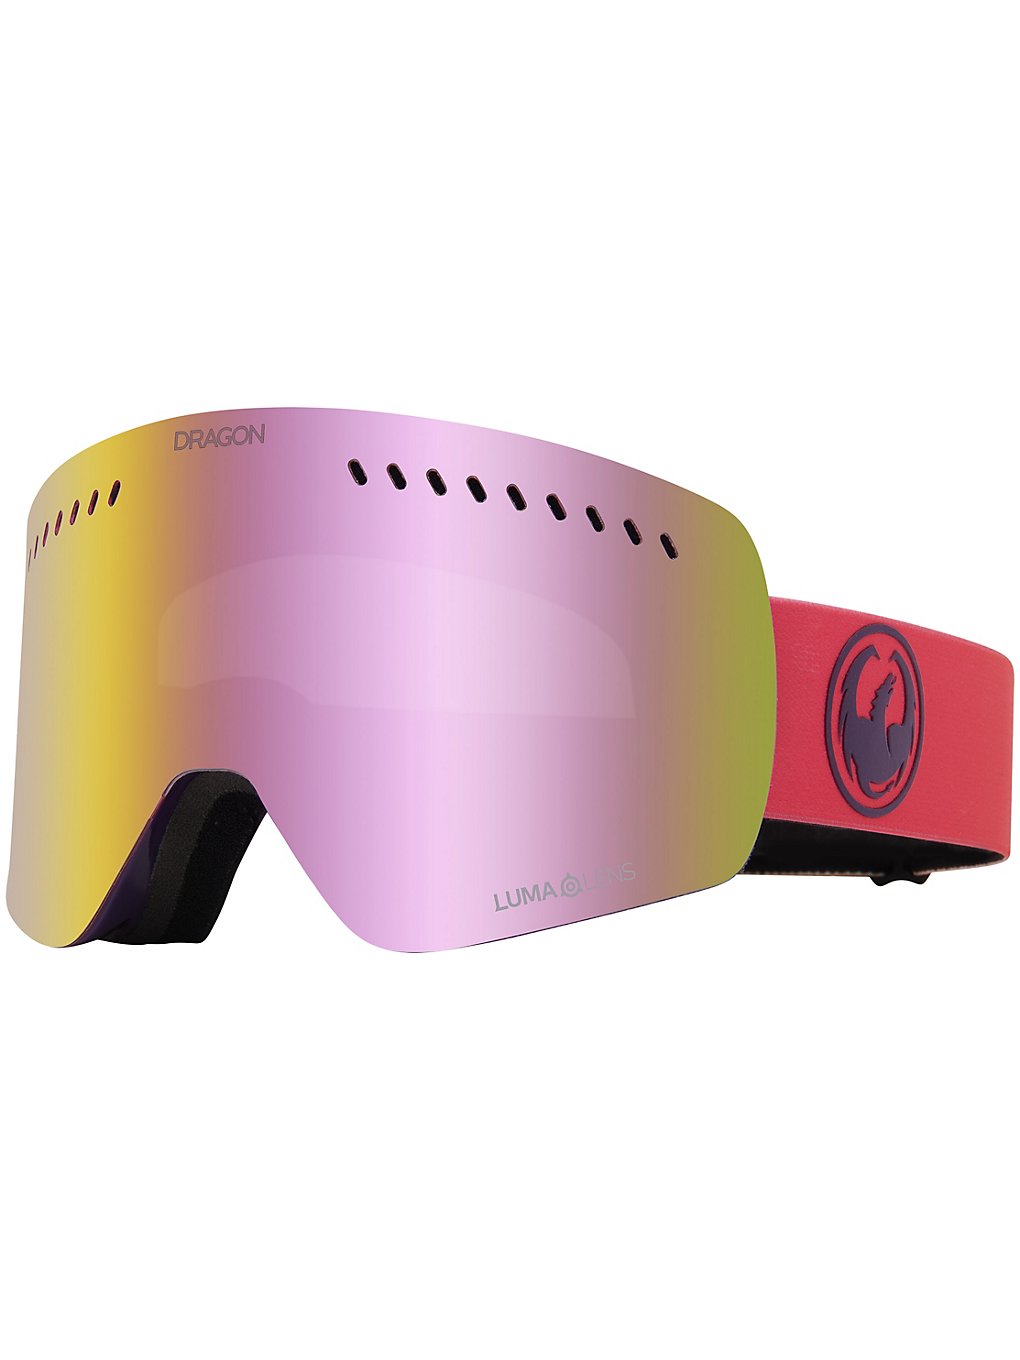 Dragon NFXs Fade Pink (+Bonus Lens) Goggle pink ion + rose